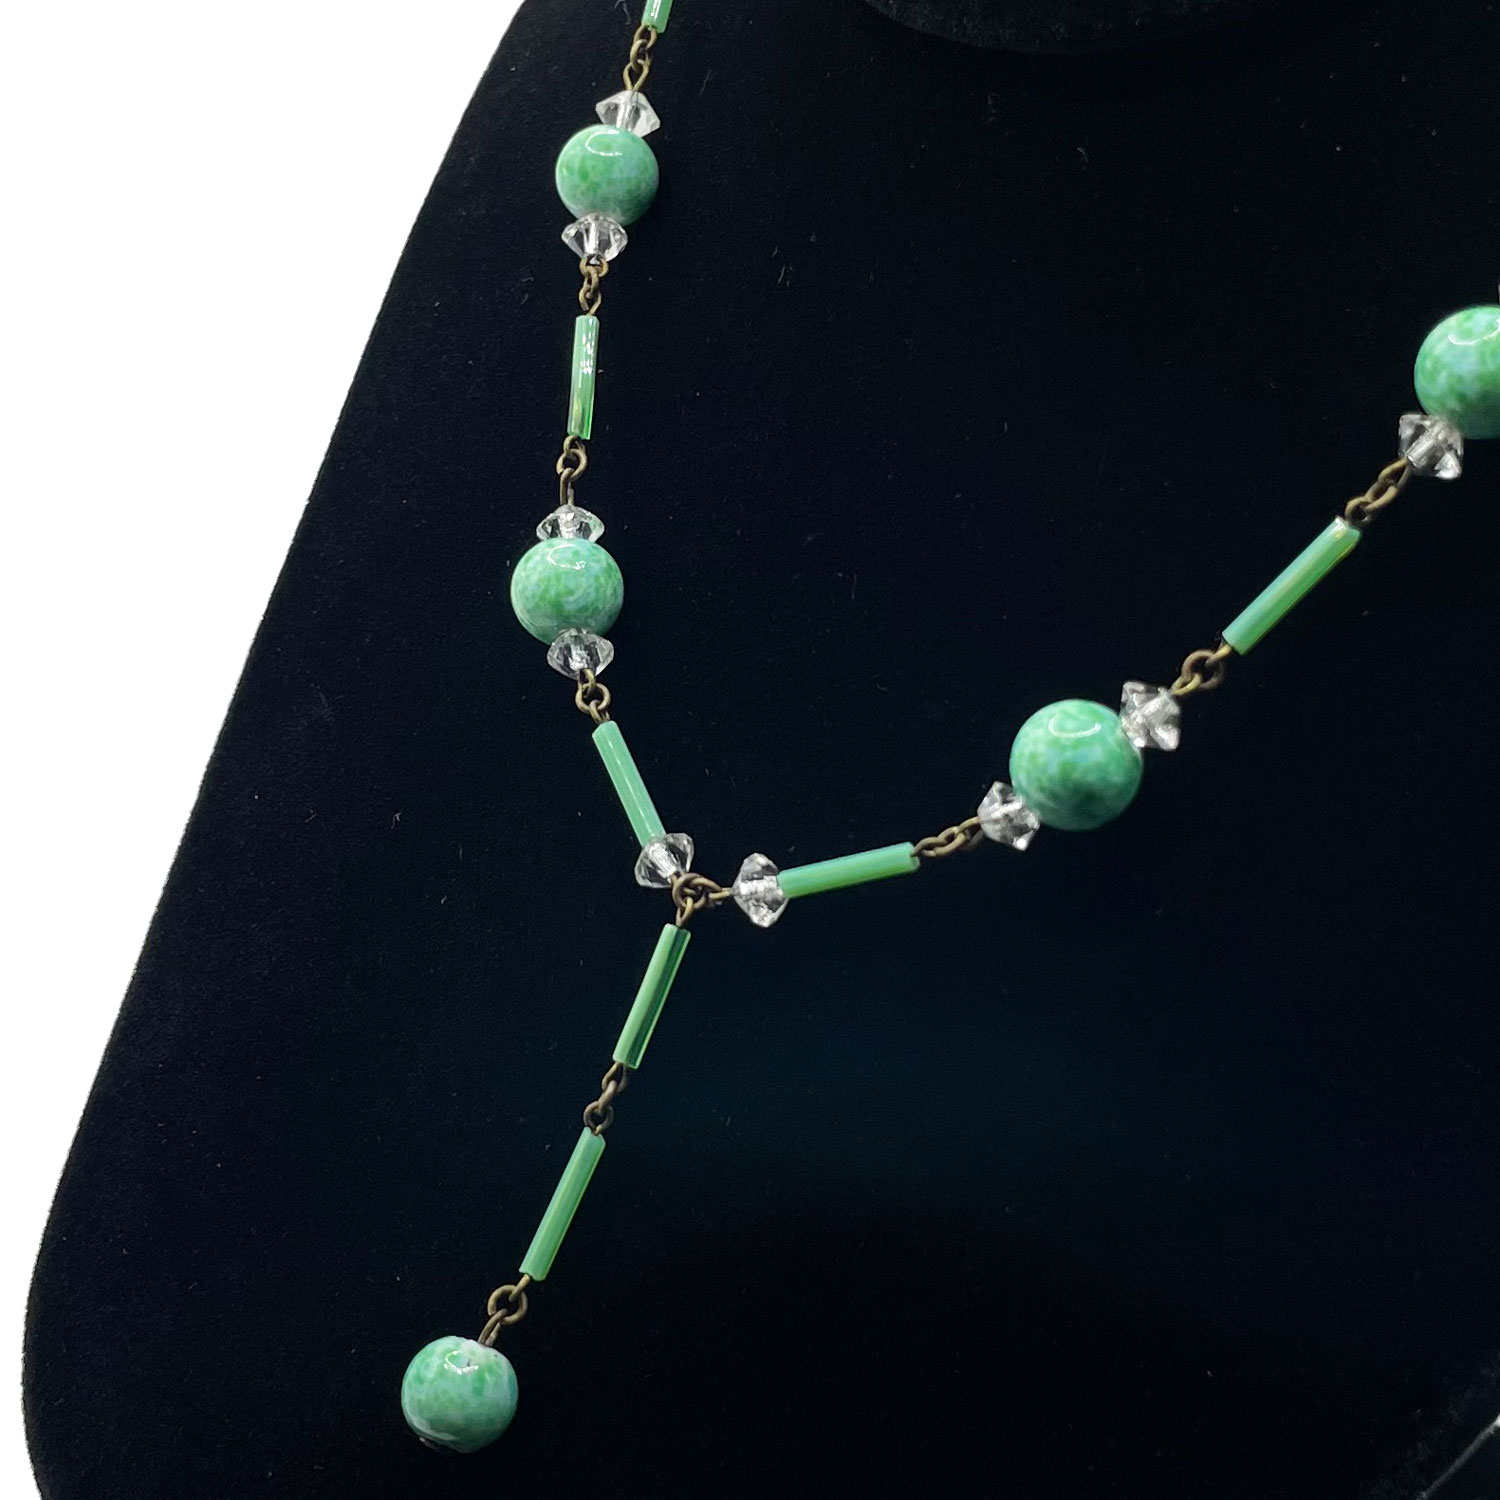 1920s Art Deco Peking glass pendant necklace